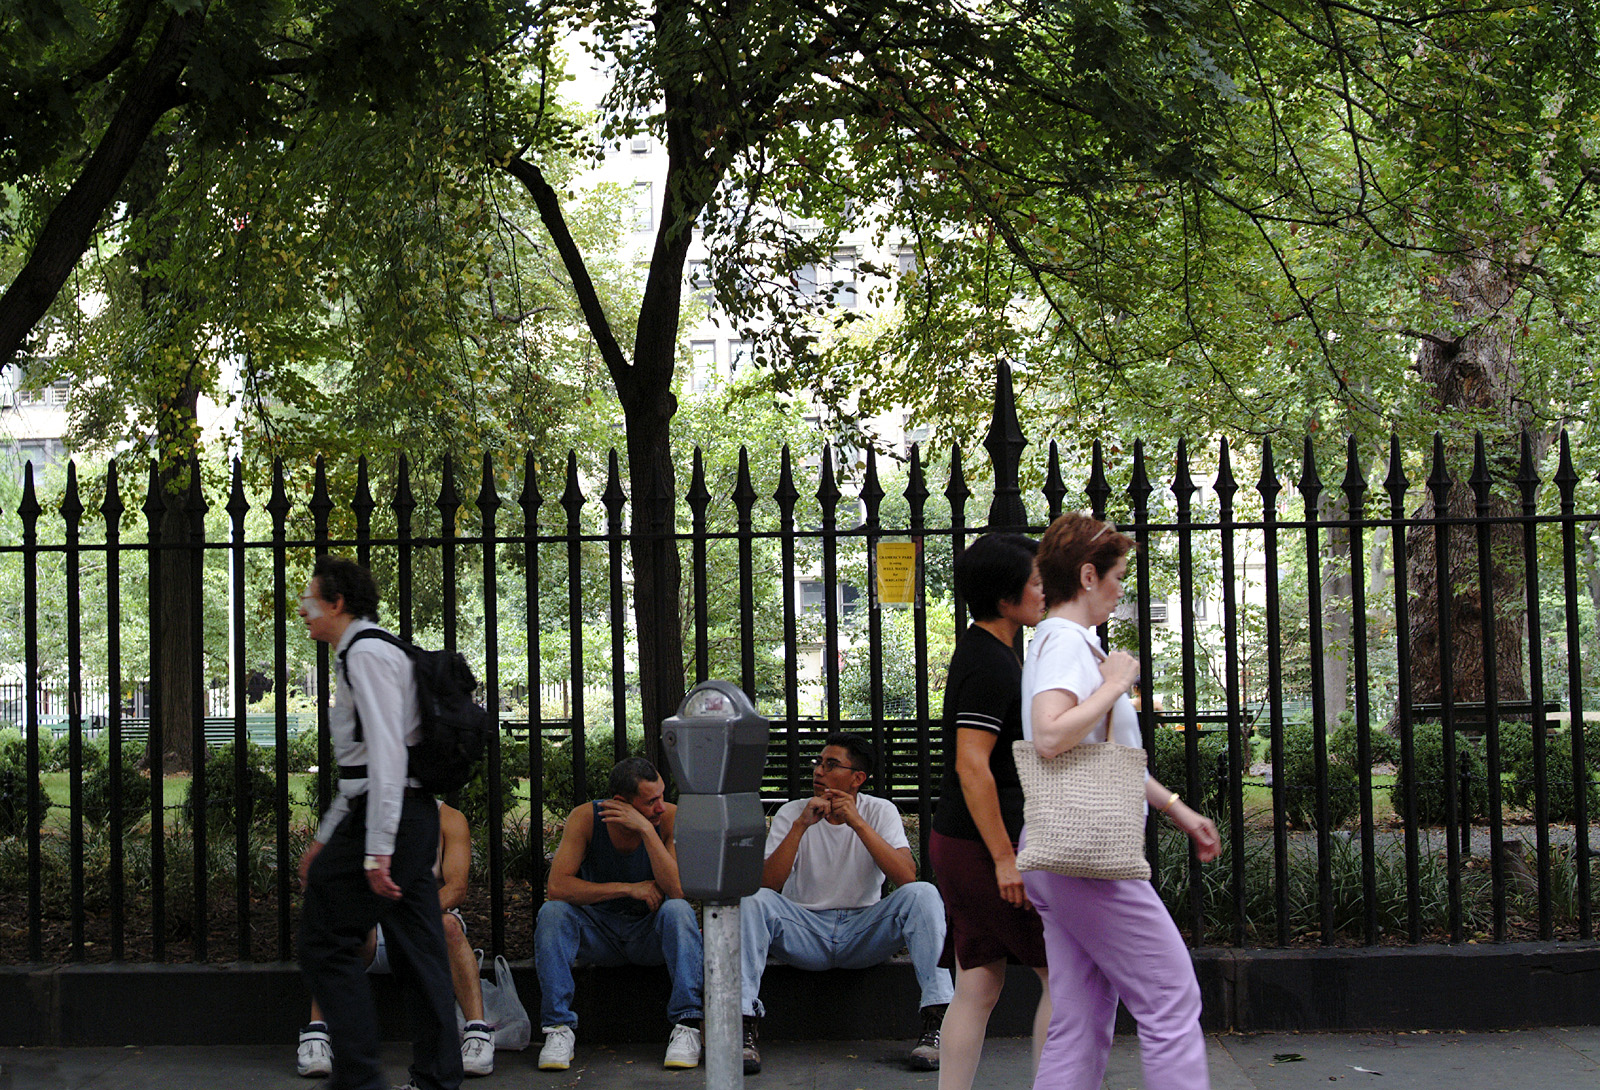 Gramercy Park passersby